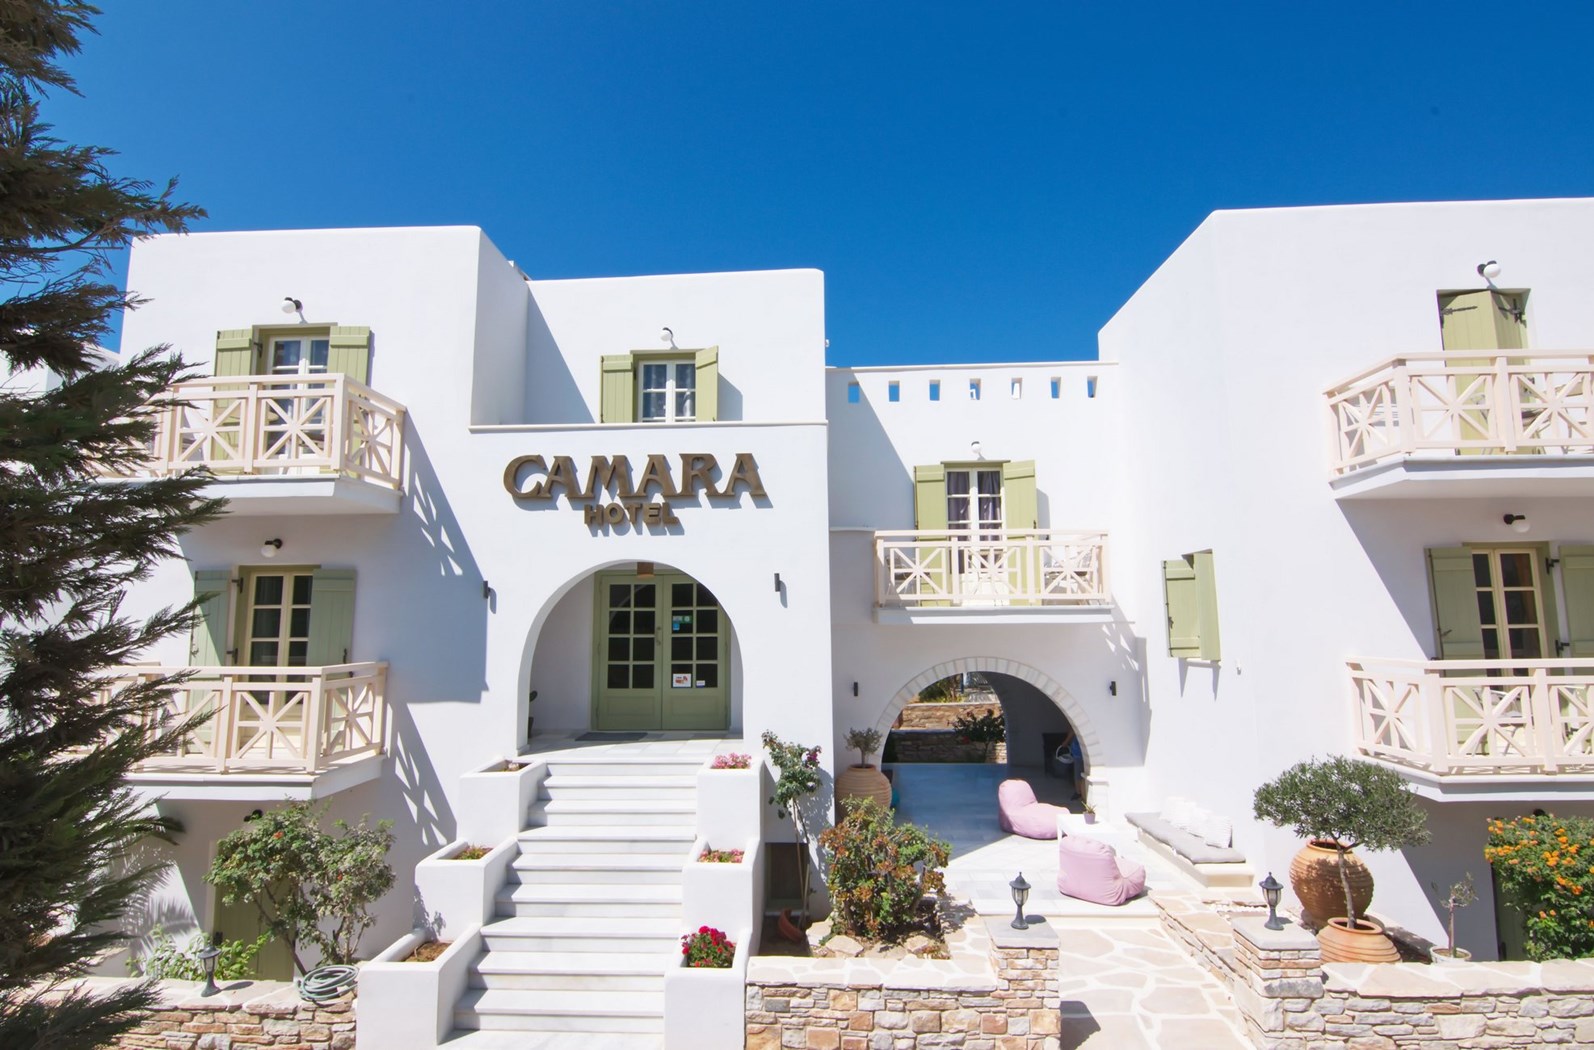 Camara Hotel - Άγιος Προκόπιος, Νάξος ✦ -3% ✦ 2 Ημέρες